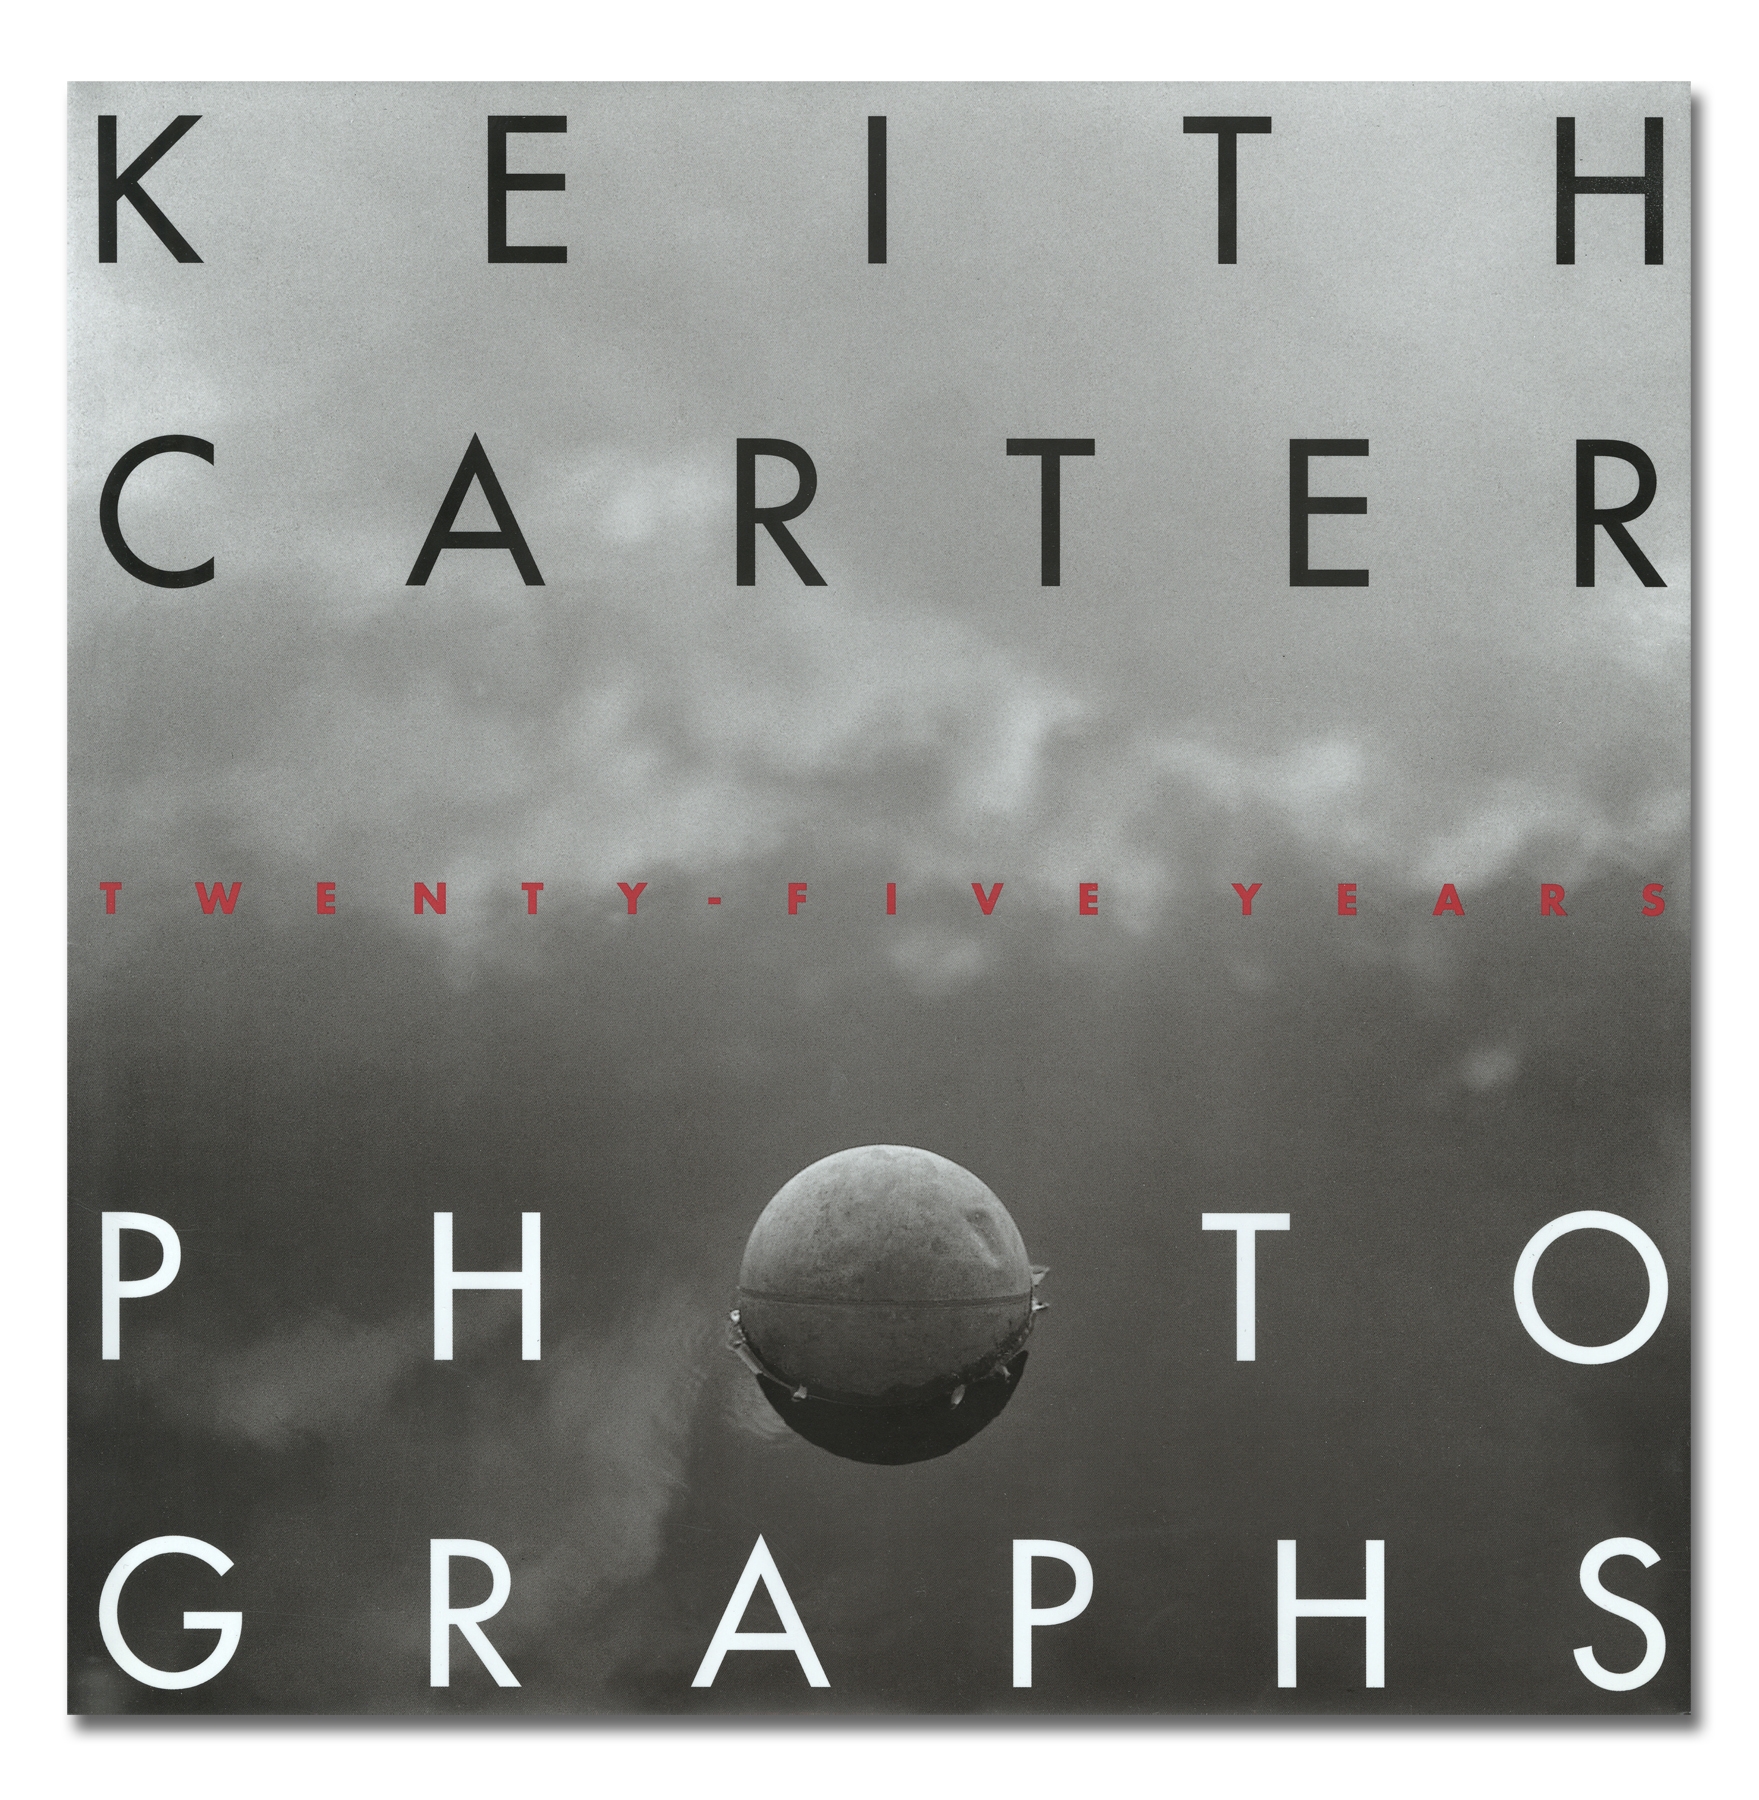 Keith Carter - Twenty-Five Years - University of Texas Press - Howard Greenberg Gallery - 2018